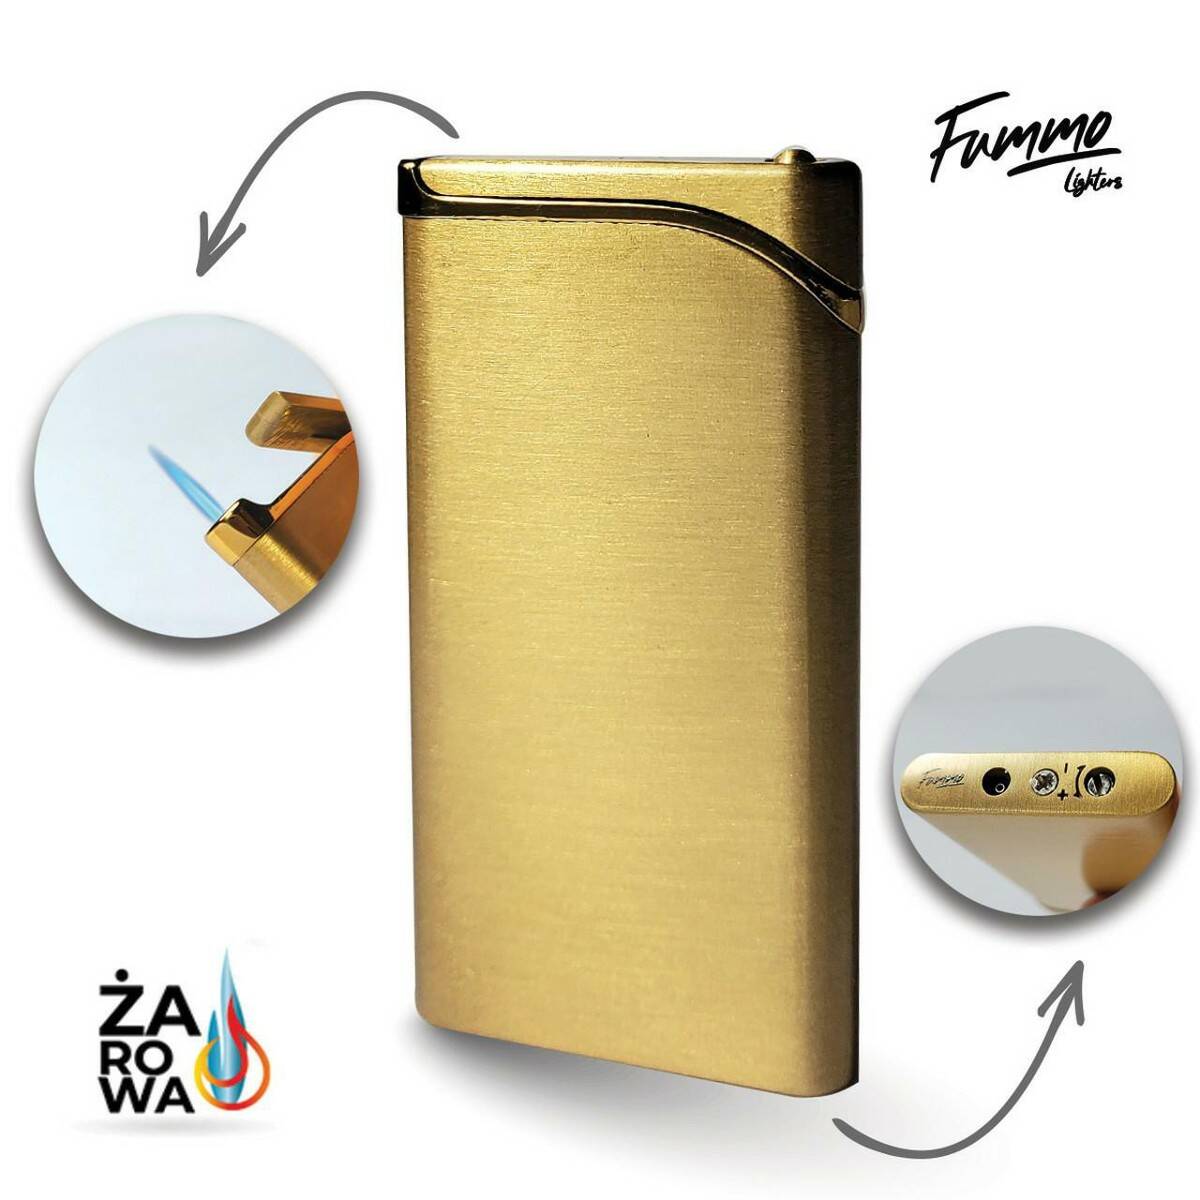 Lighter Fummo Toora - Gold